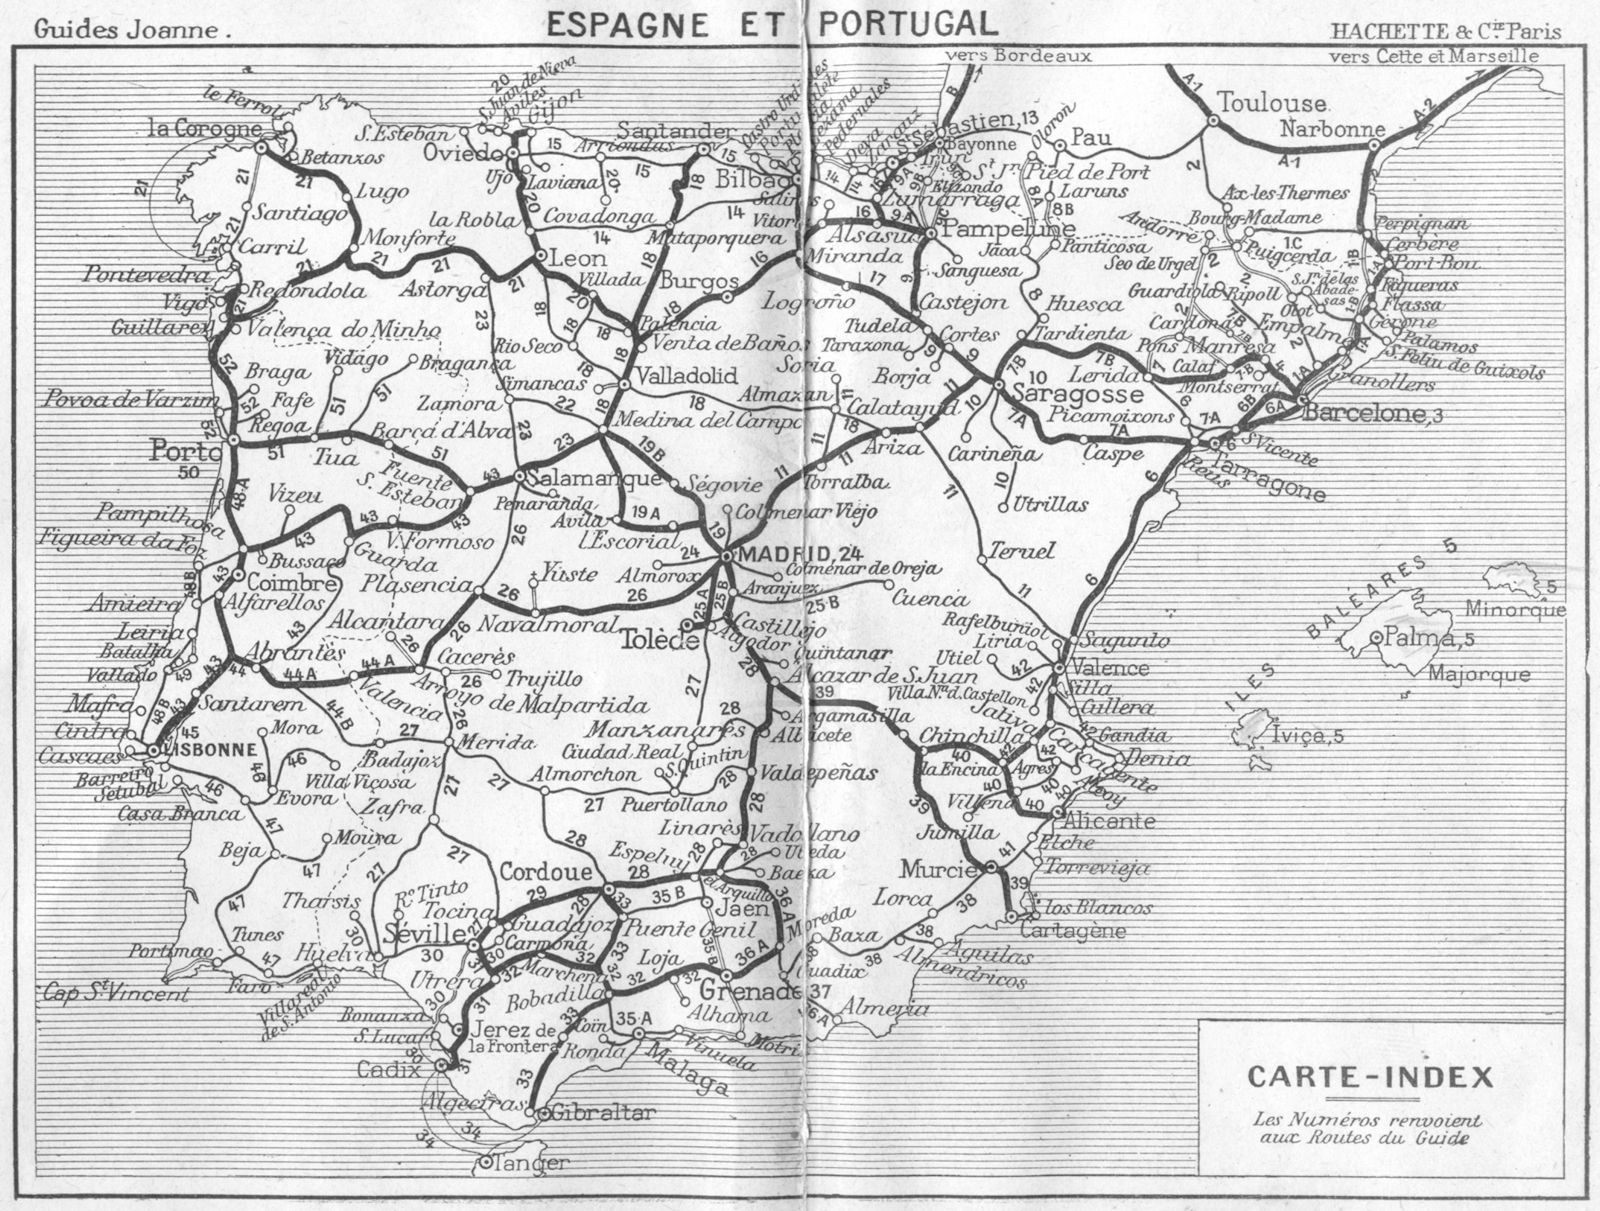 SPAIN. Espagne(Spain)Portugal Carte index 1921 old antique map plan chart